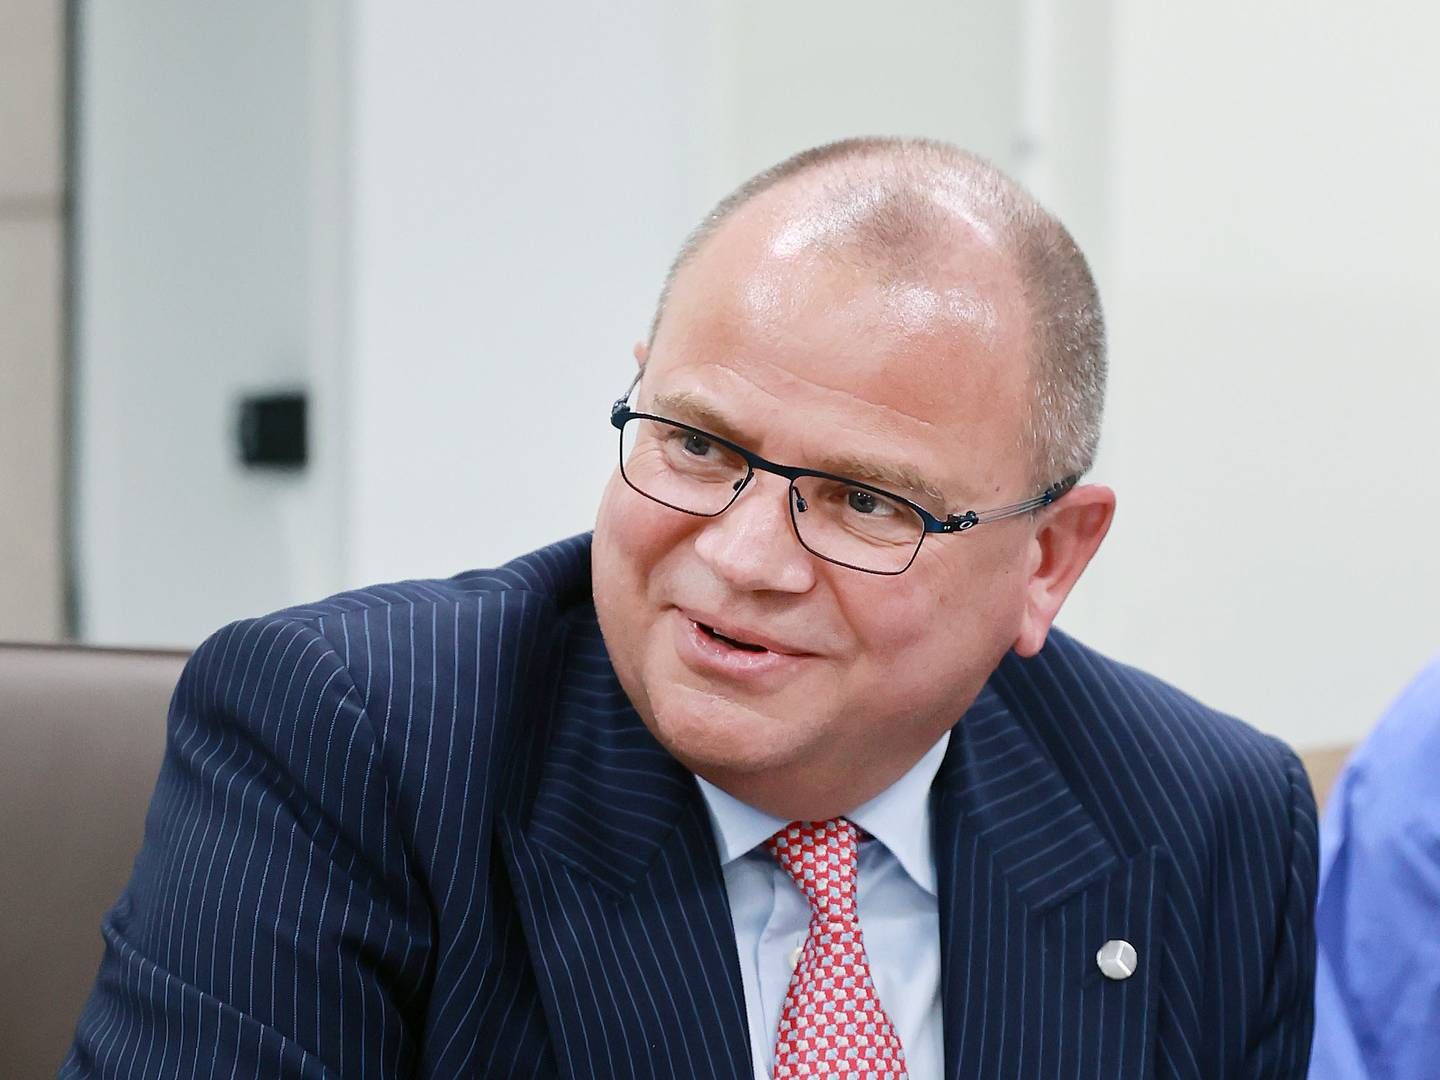 Henrik Andersen, CEO, Vestas. | Photo: motie.go.kr